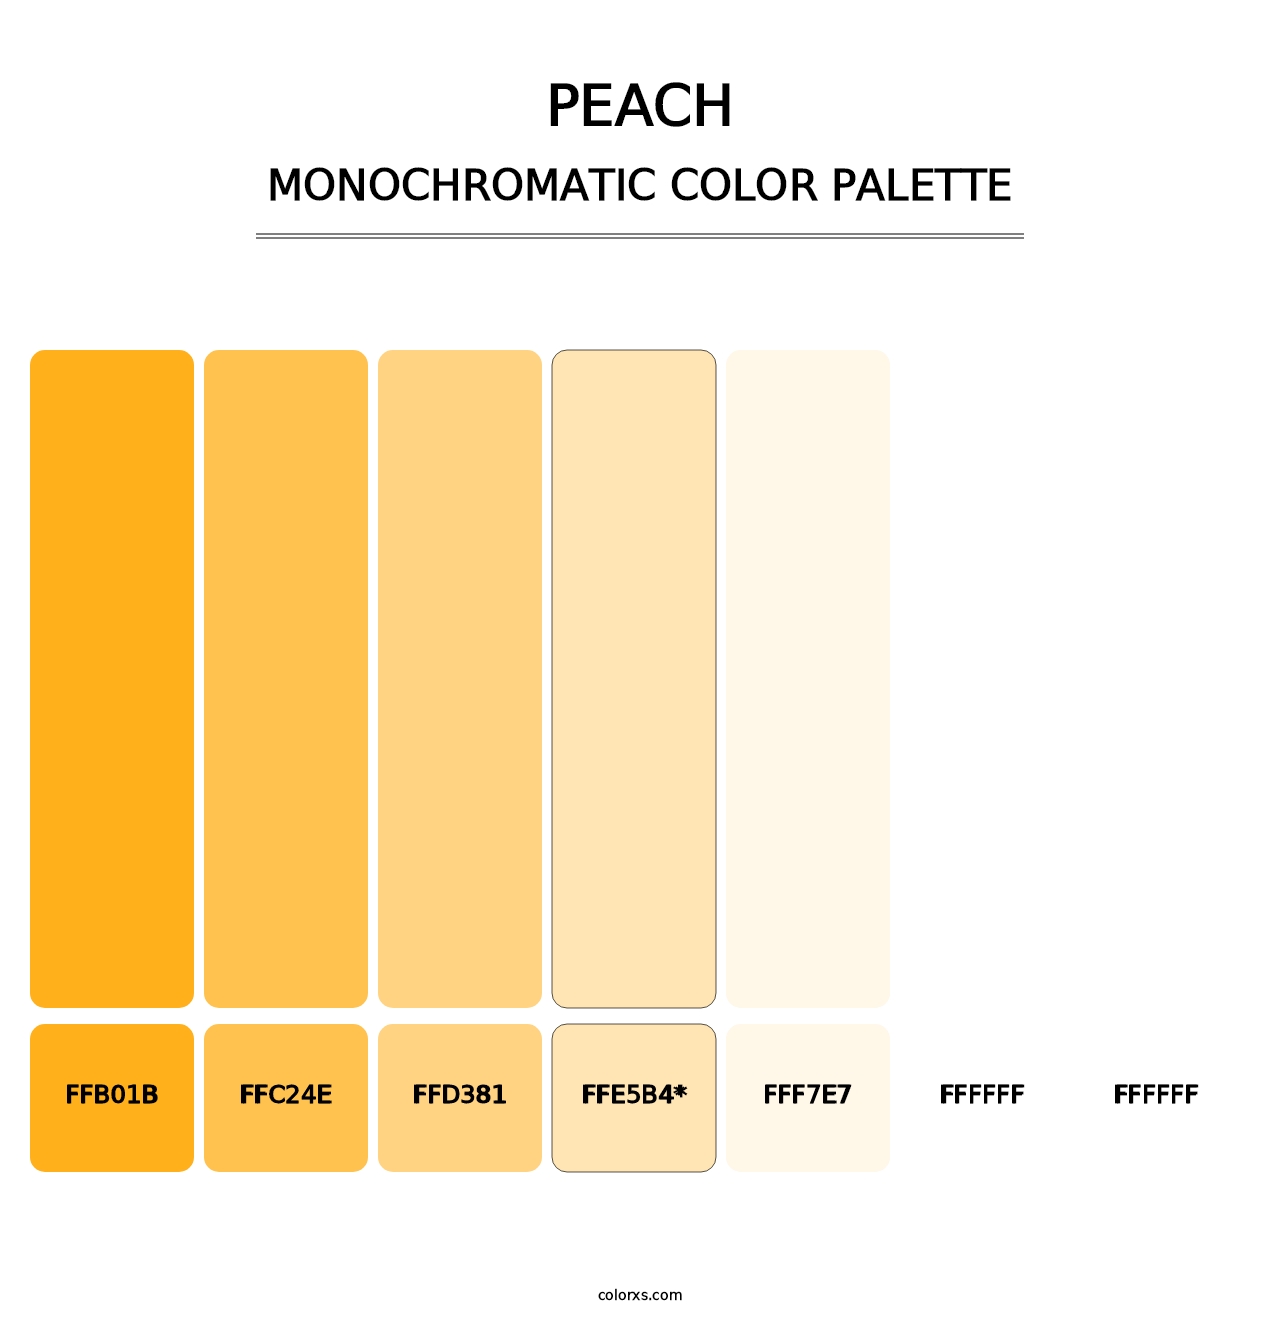 Peach - Monochromatic Color Palette